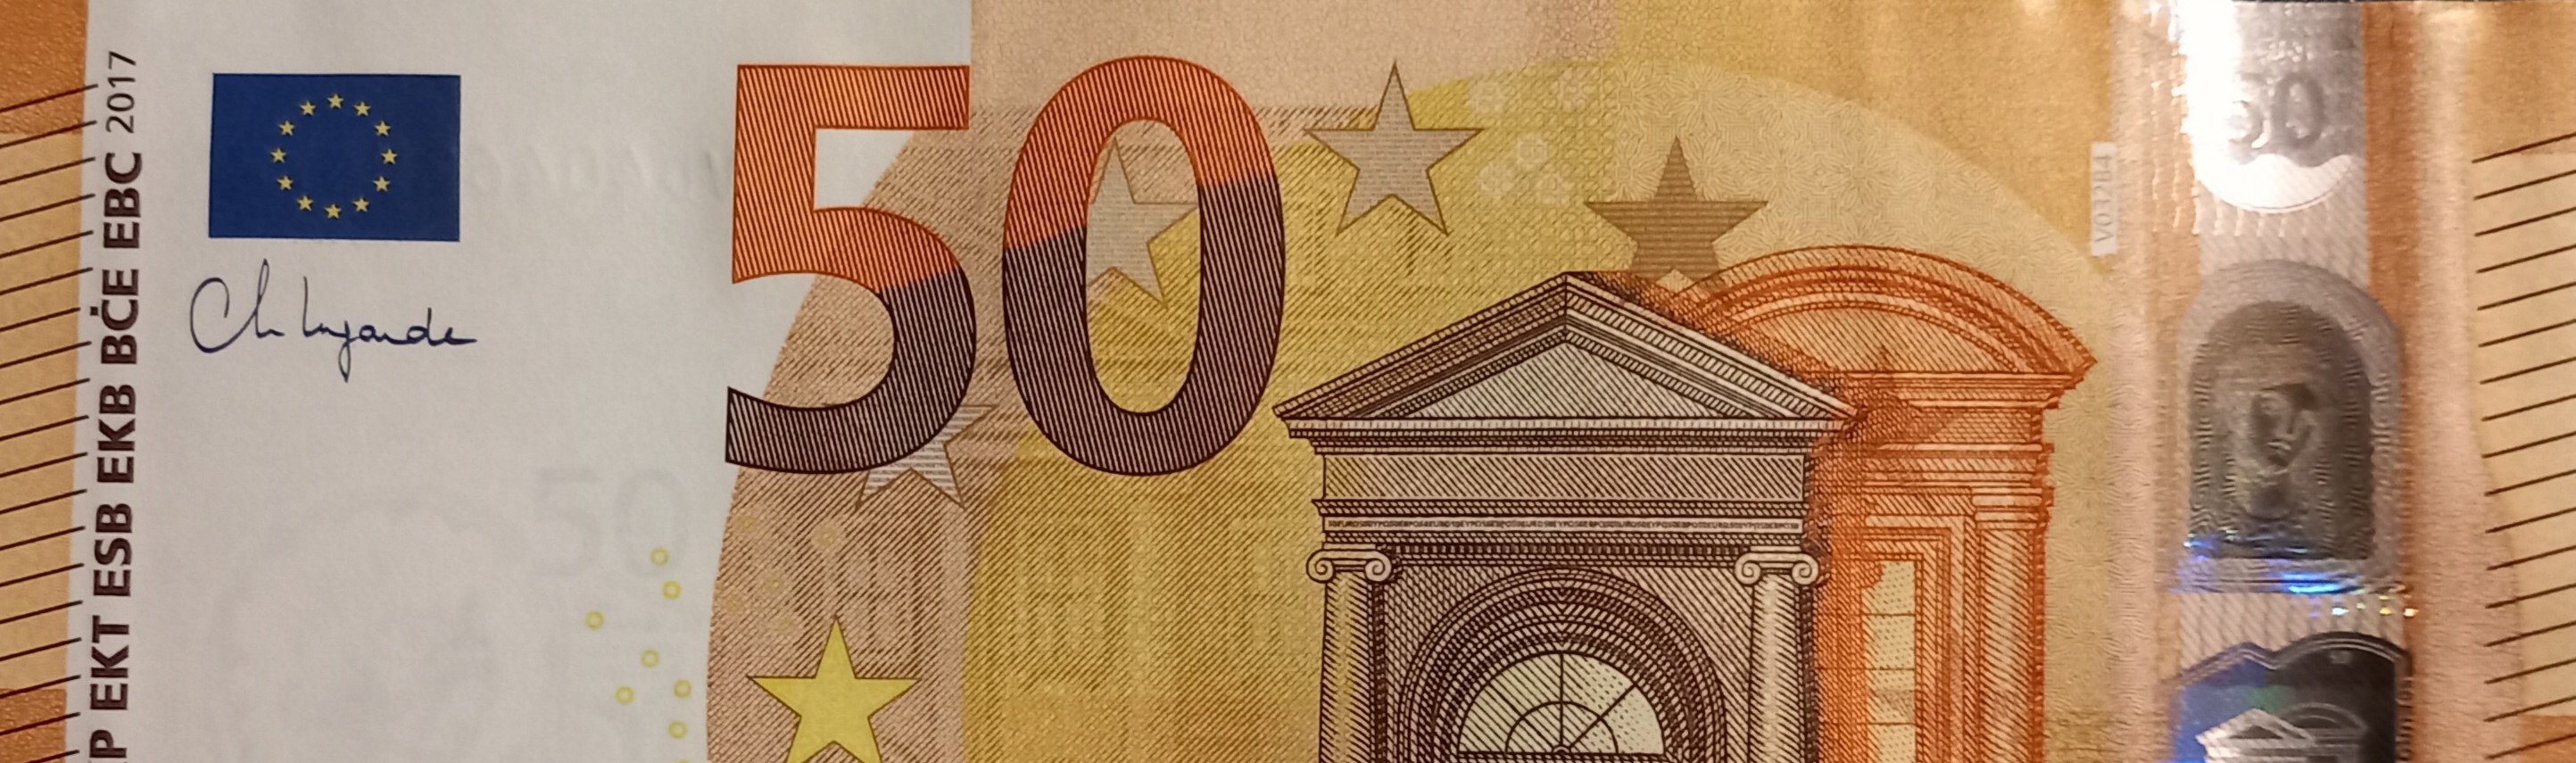 50 V V 032  Lagarde - Collection EUROPE